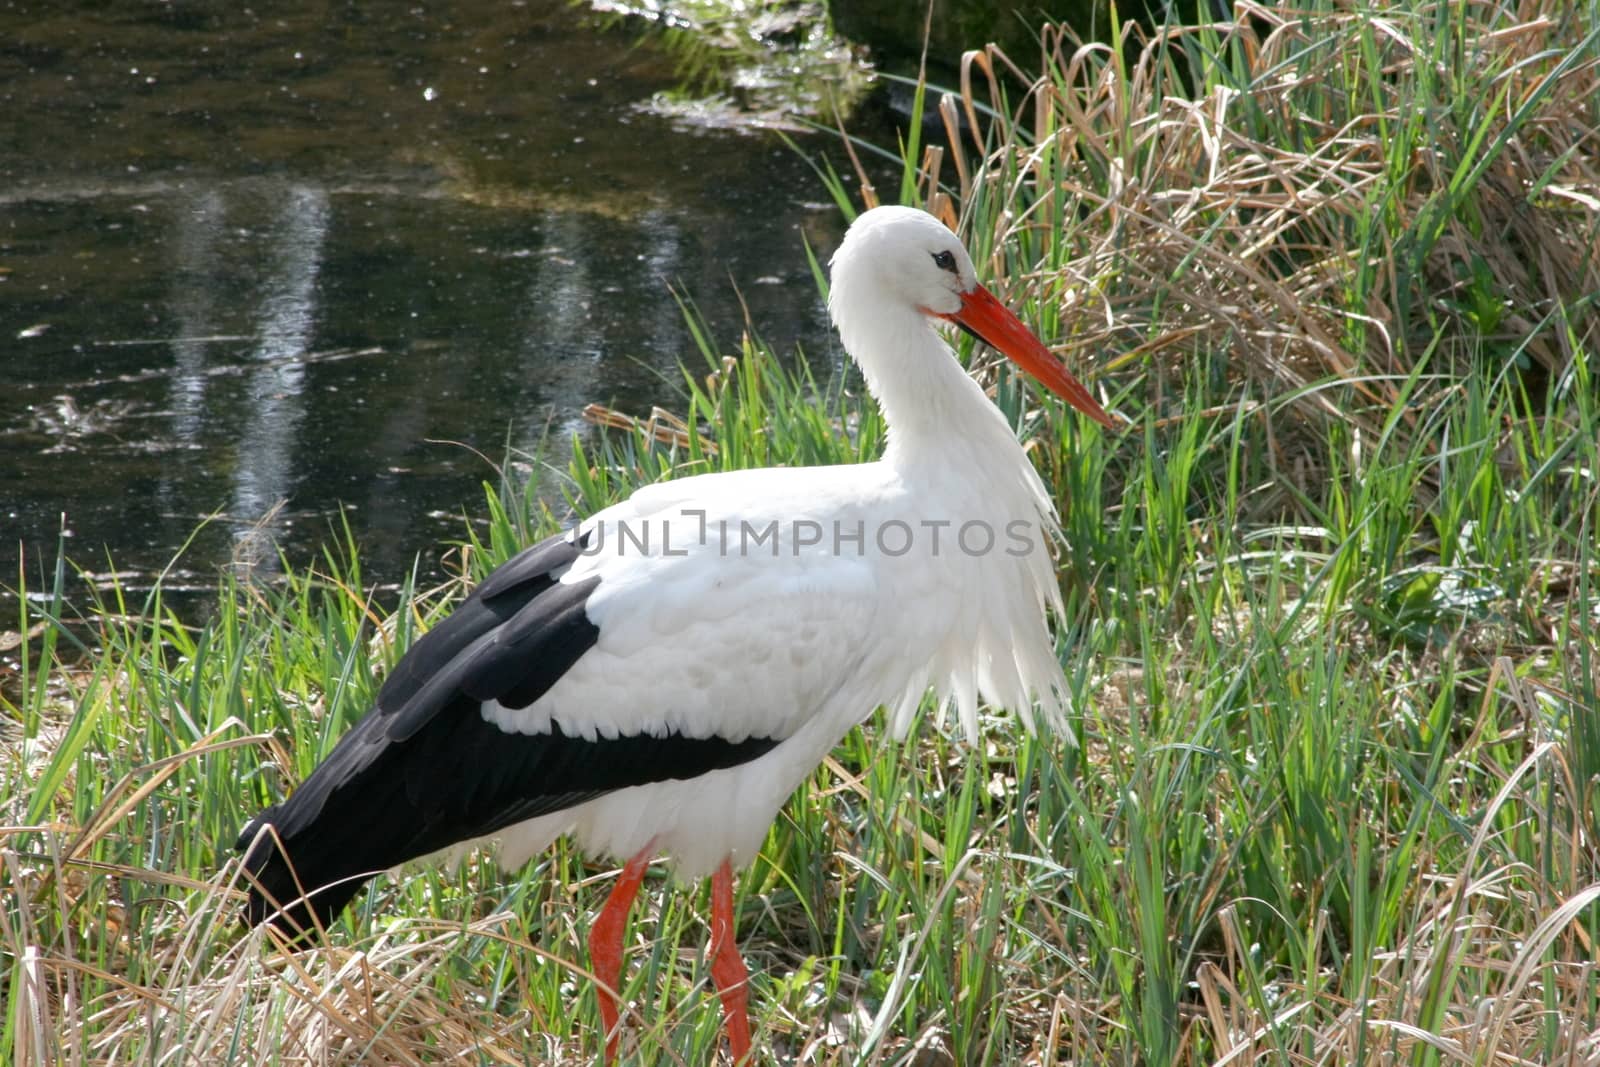 White Stork walks around on a green meadow